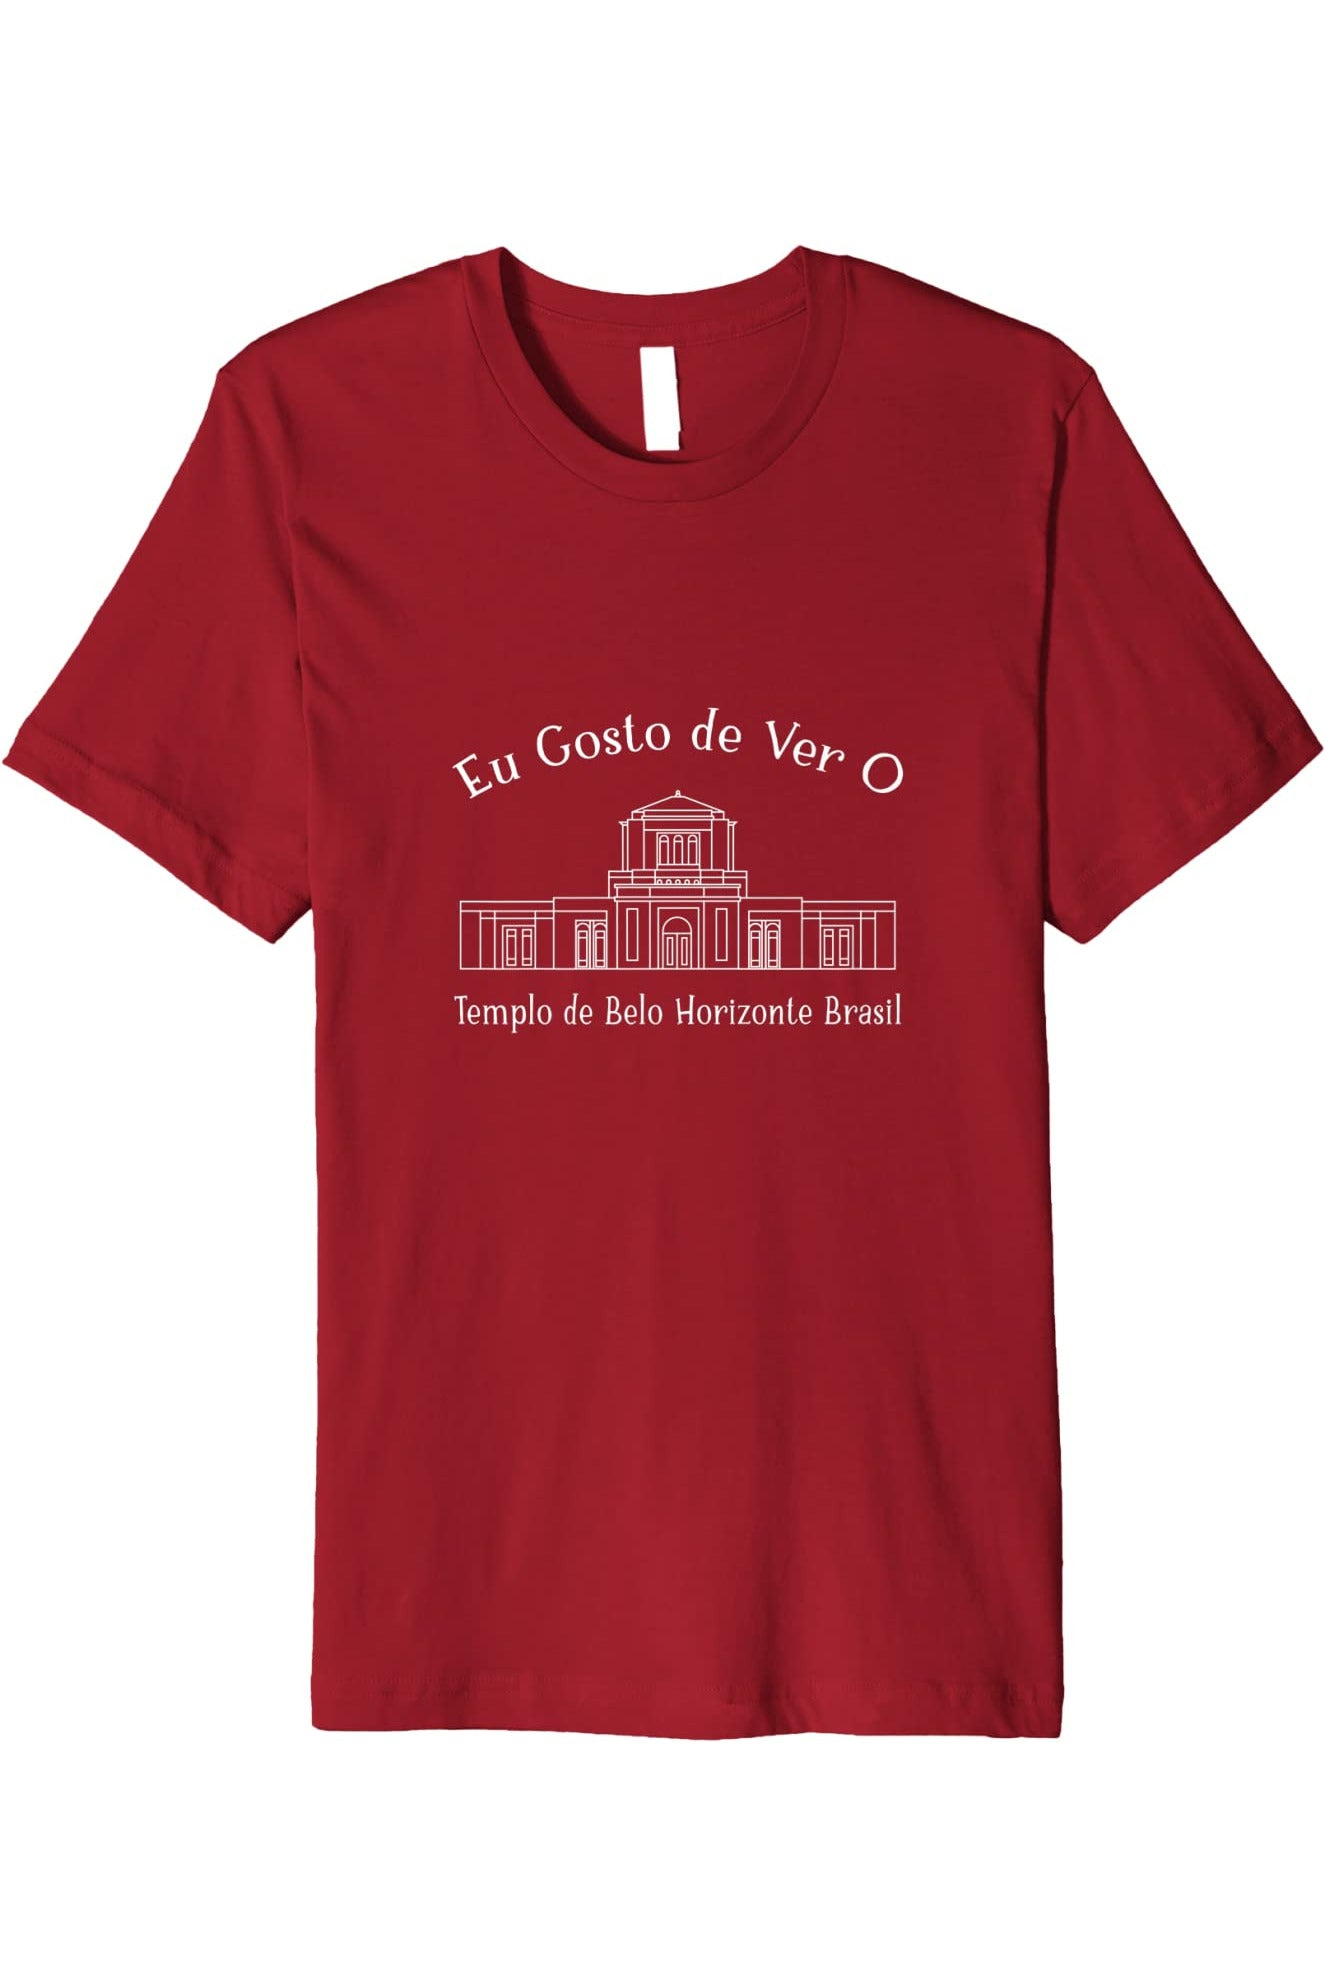 Belo Horizonte Brazil Temple T-Shirt - Premium - Happy Style (Portuguese) US